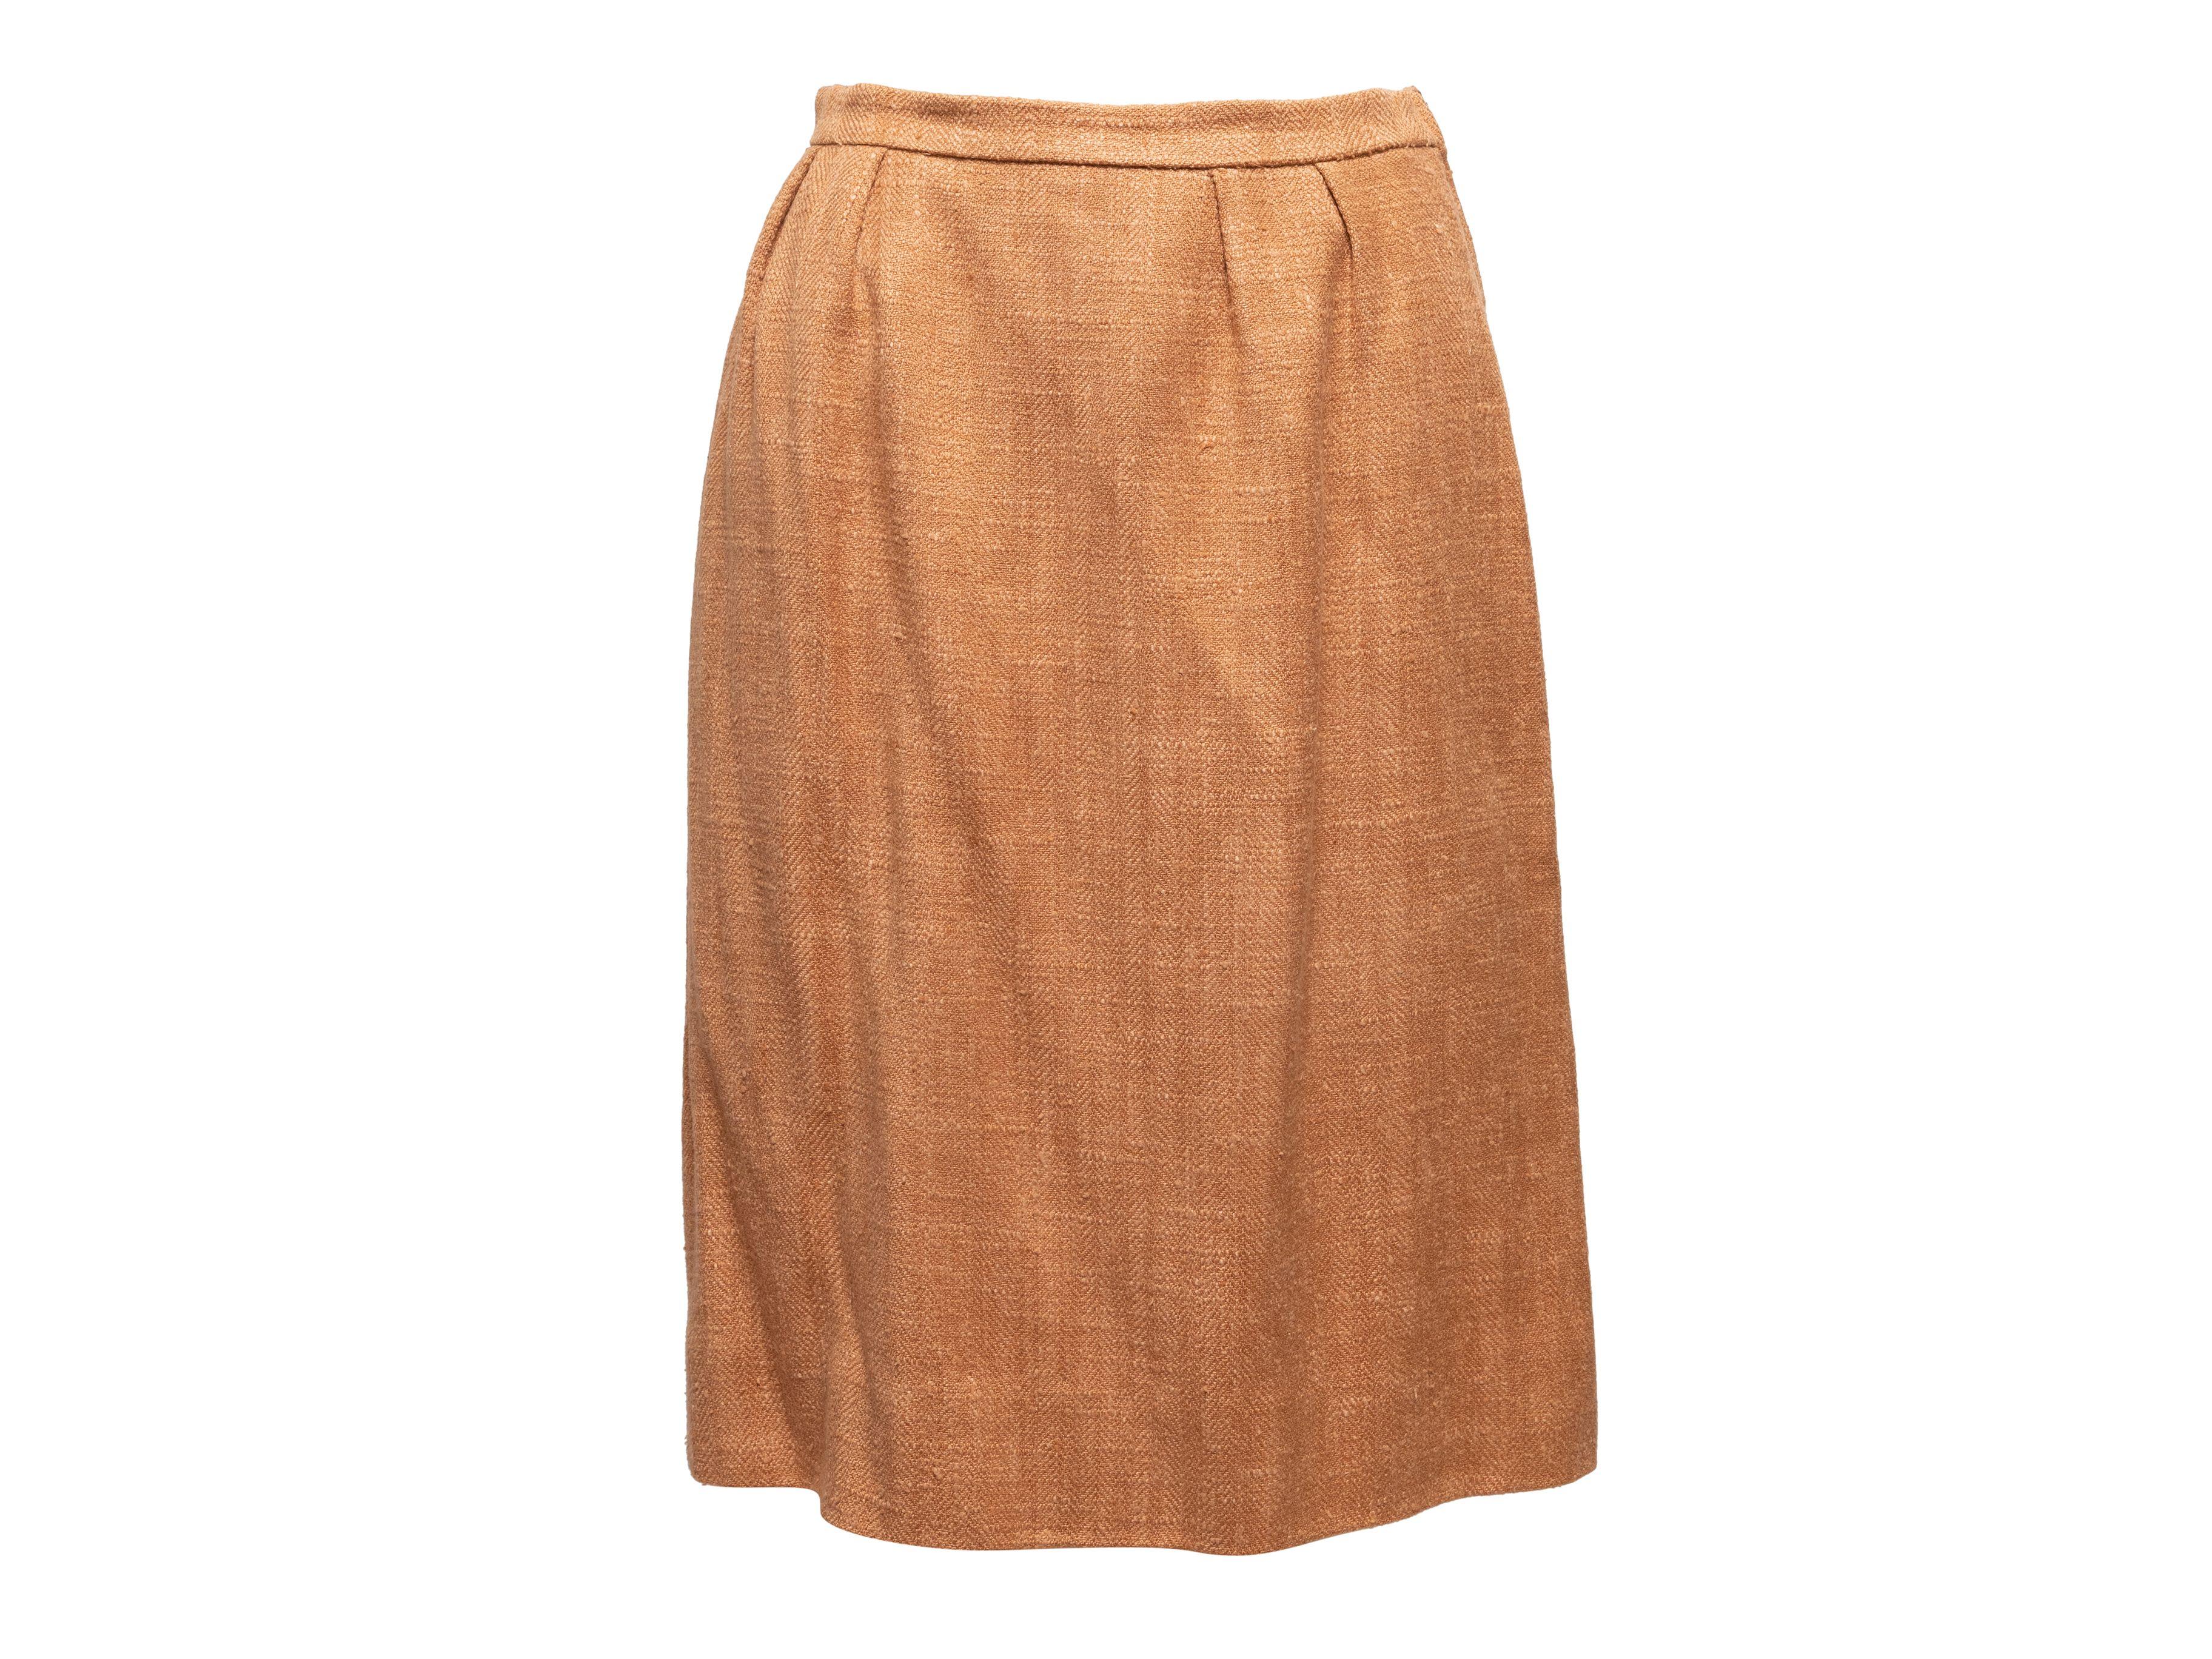 Women's Hermes Tan Tweed Skirt Suit